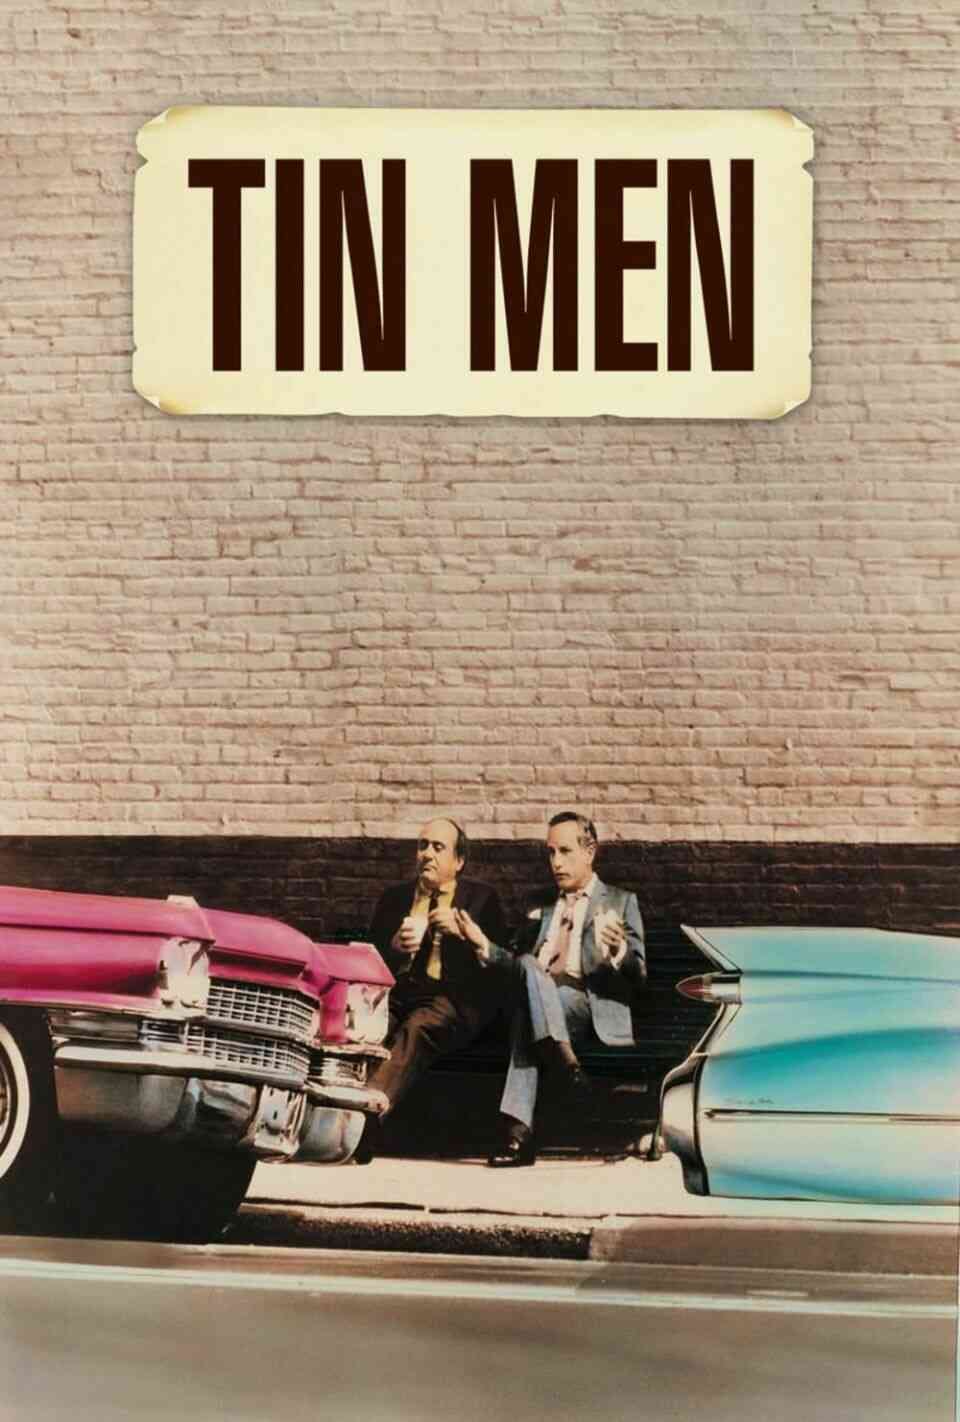 Read Tin Men screenplay (poster)